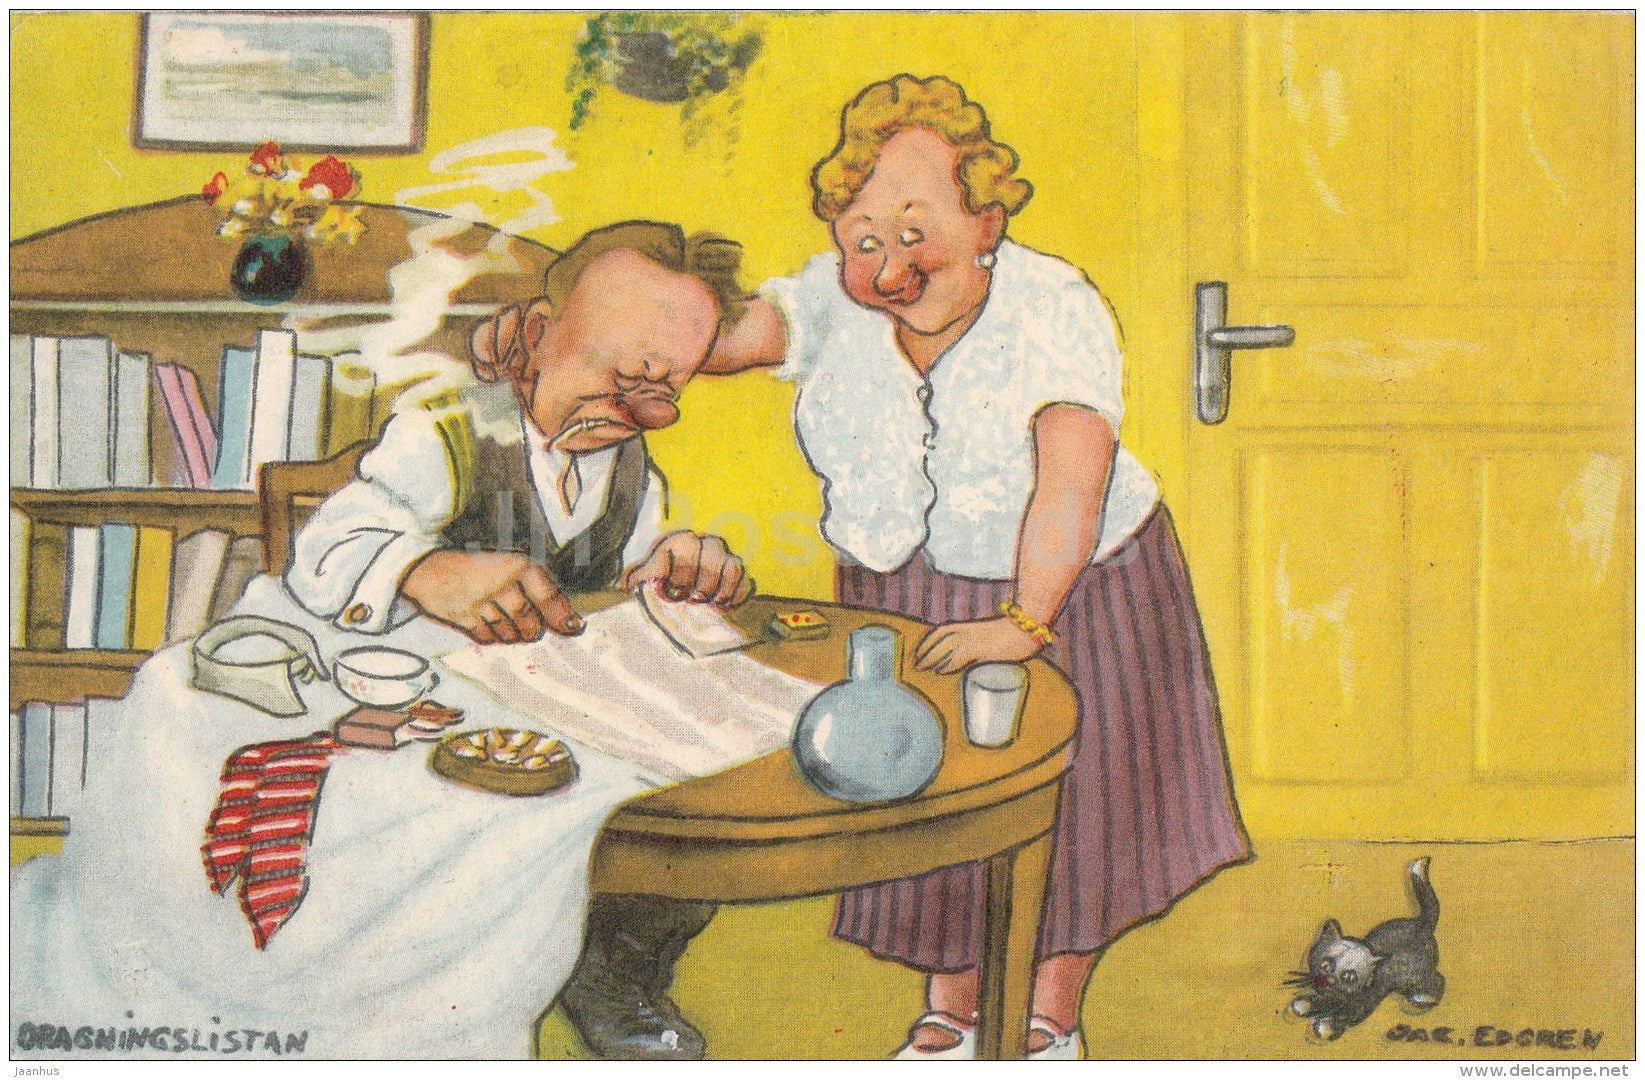 illustration by Jak. Edgren - humor - dragningslistan - agenda - man and woman - 45 - Sweden - unused - JH Postcards